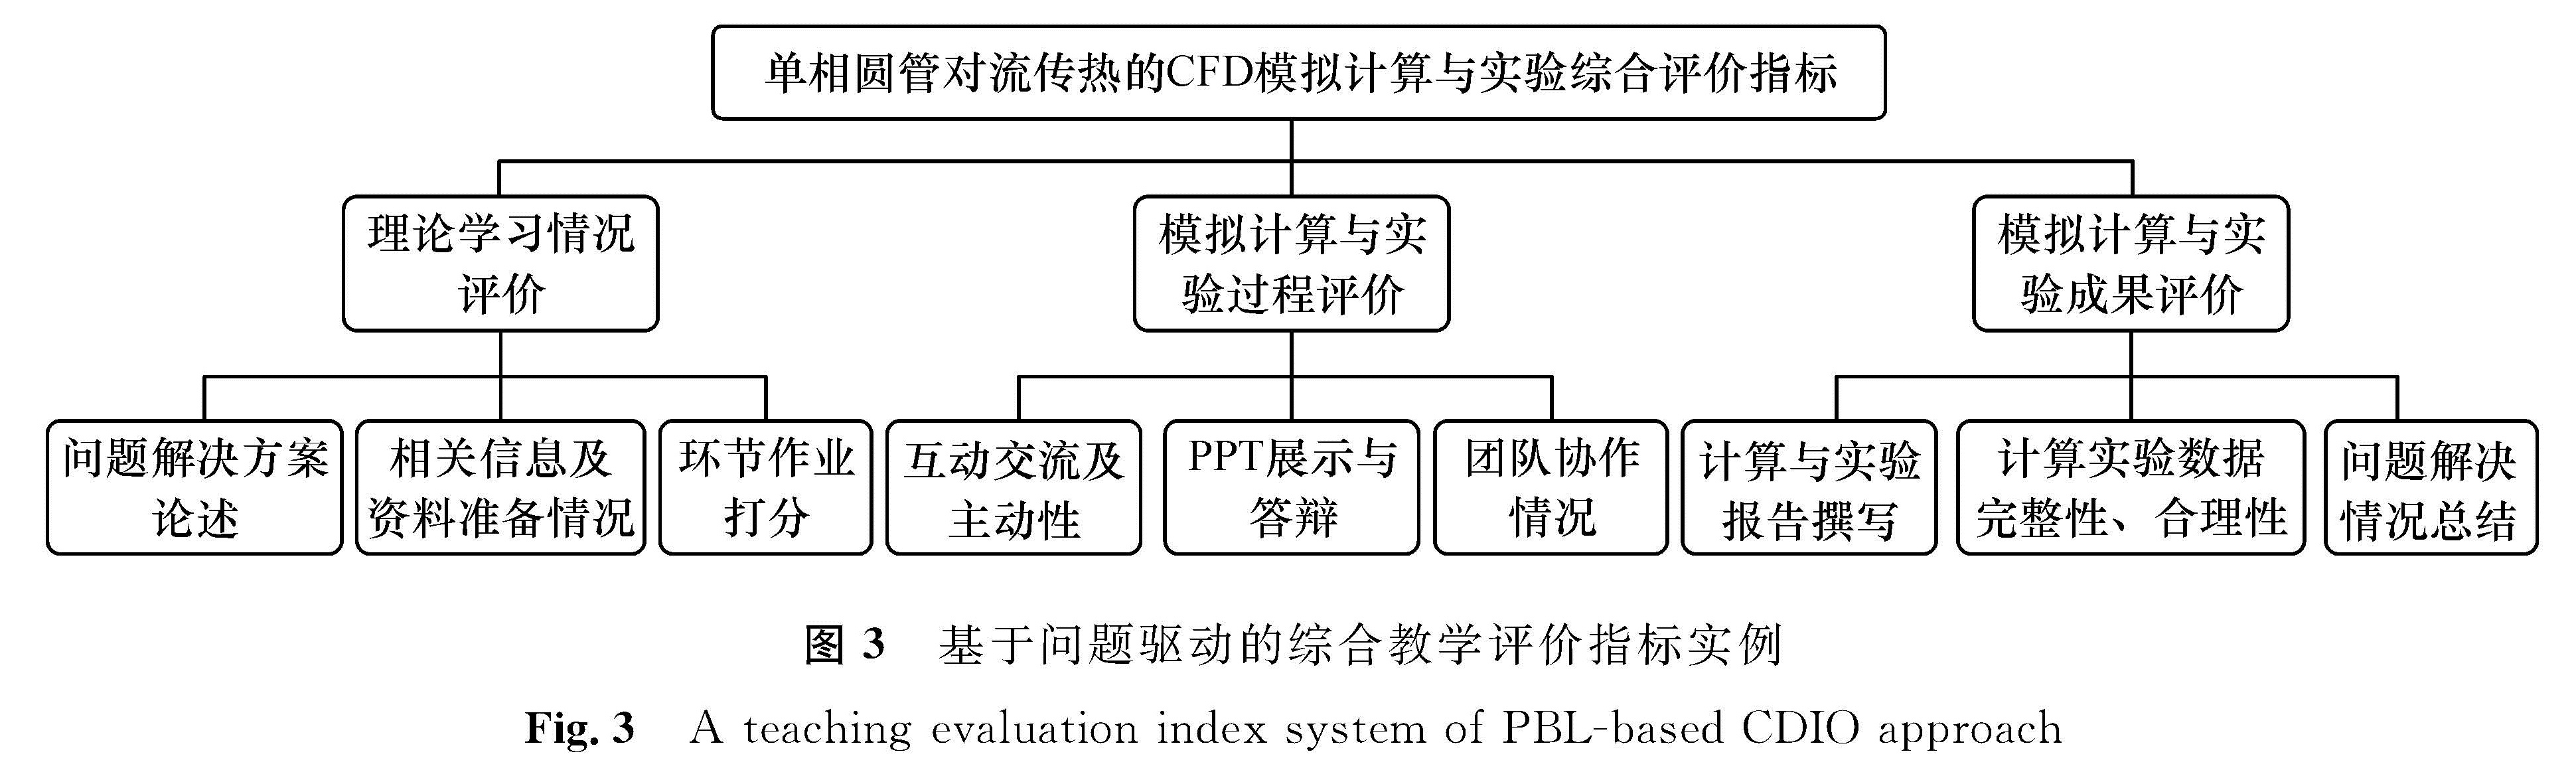 图3 基于问题驱动的综合教学评价指标实例<br/>Fig.3 A teaching evaluation index system of PBL-based CDIO approach